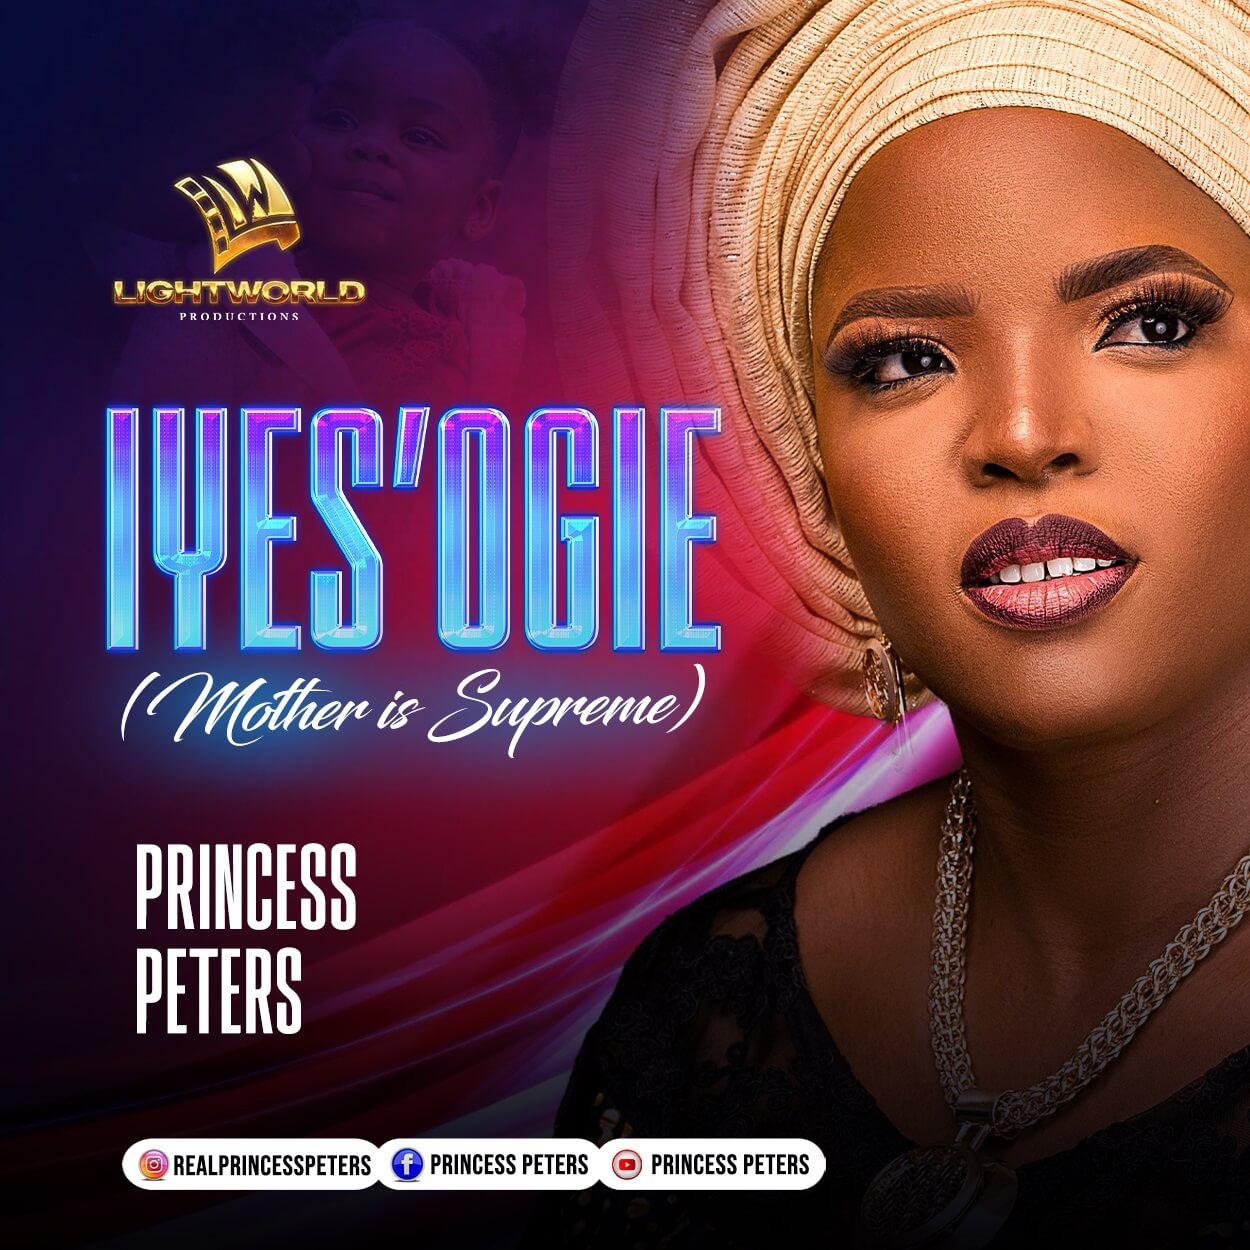 Princess-Peters-Iyesogie